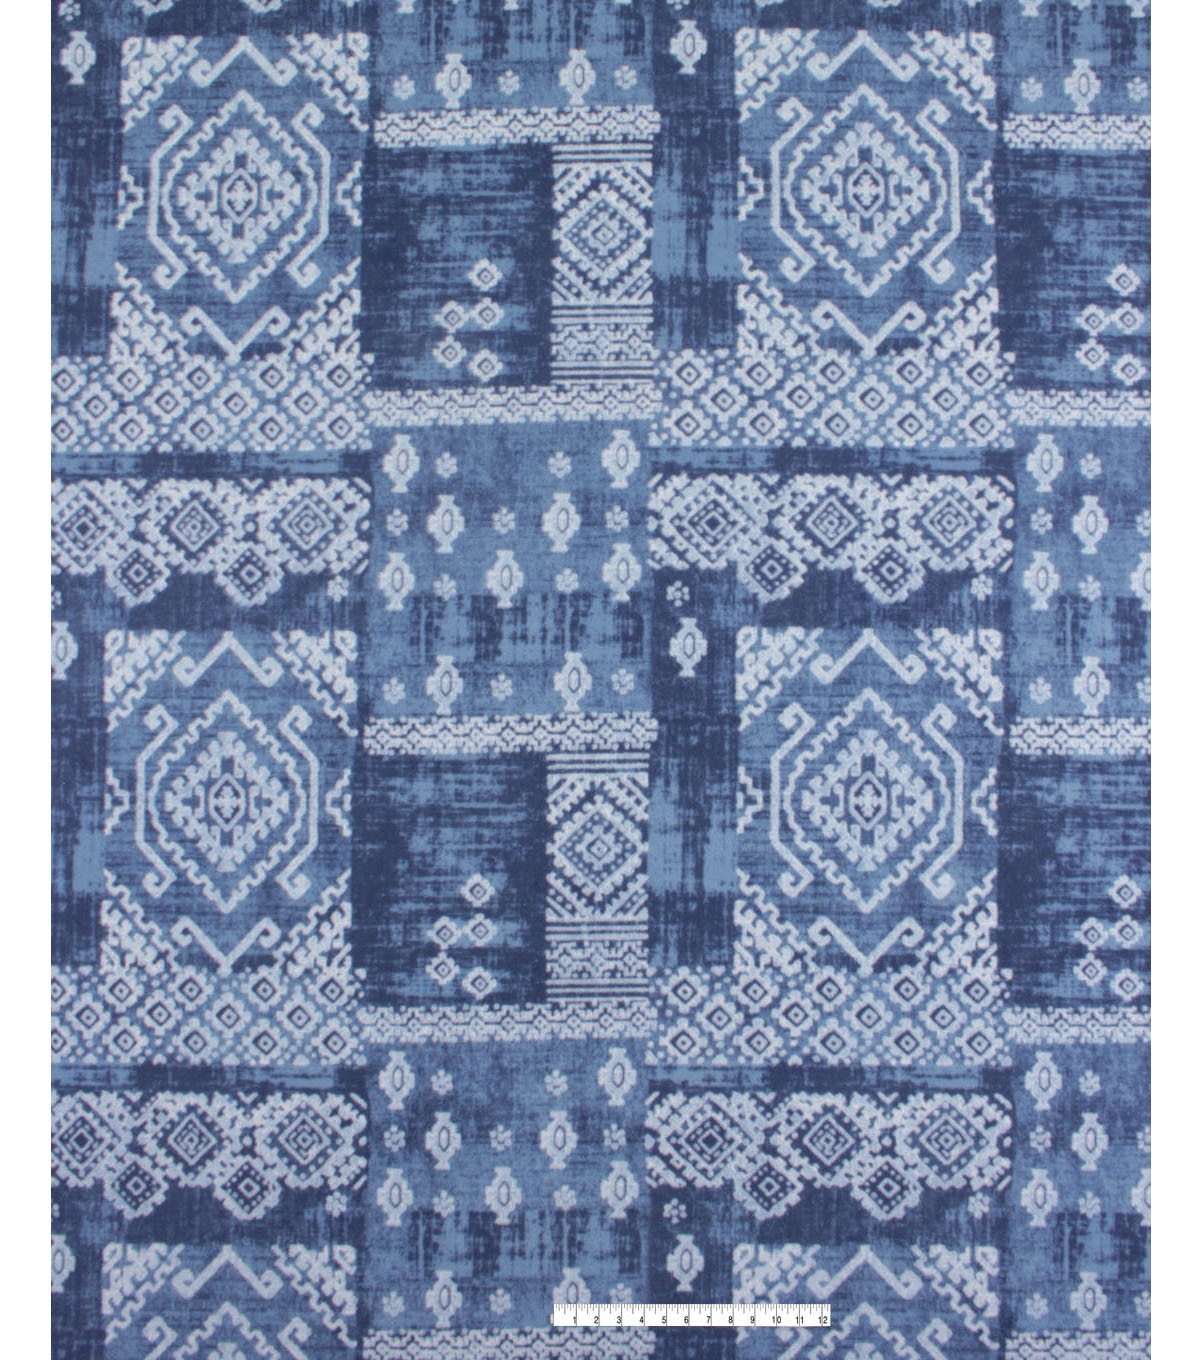 No Sew Fleece Throw Kit Navy Aztec Patch | JOANN